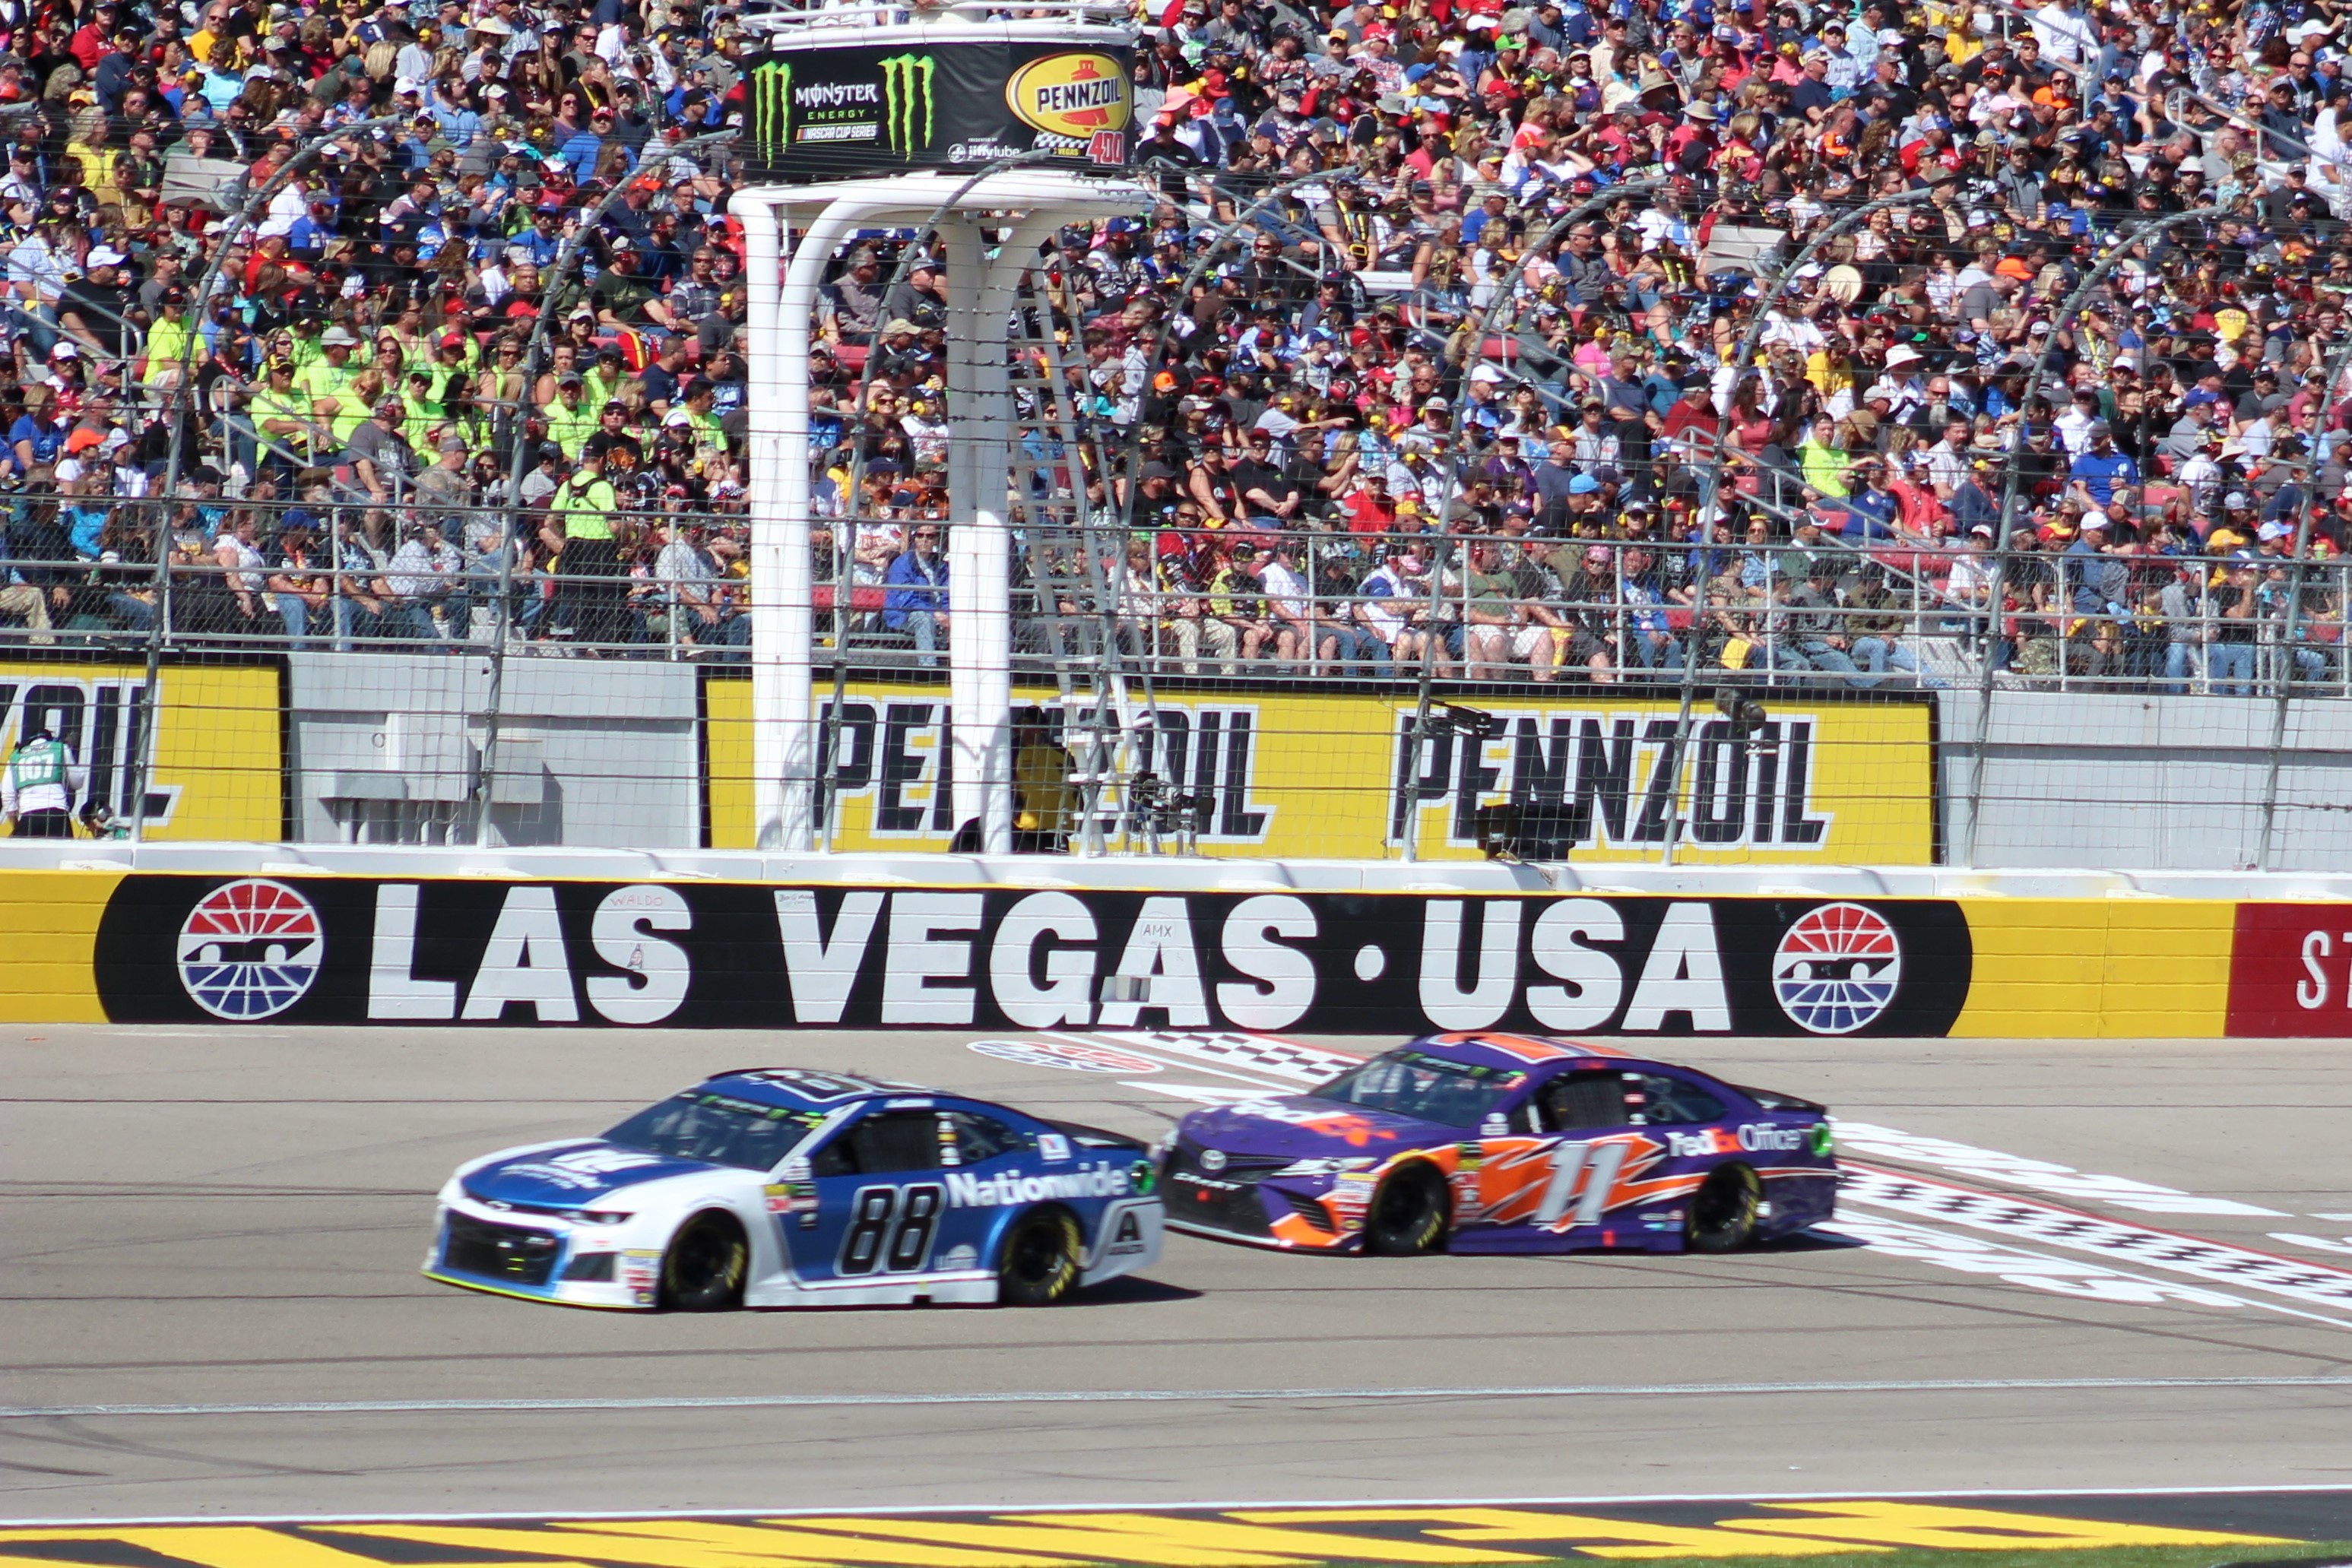 Bowman leads Denny Hamlin down the frontstretch at Las Vegas. (Photo Credit: Jose L. Acero Jr/TPF)